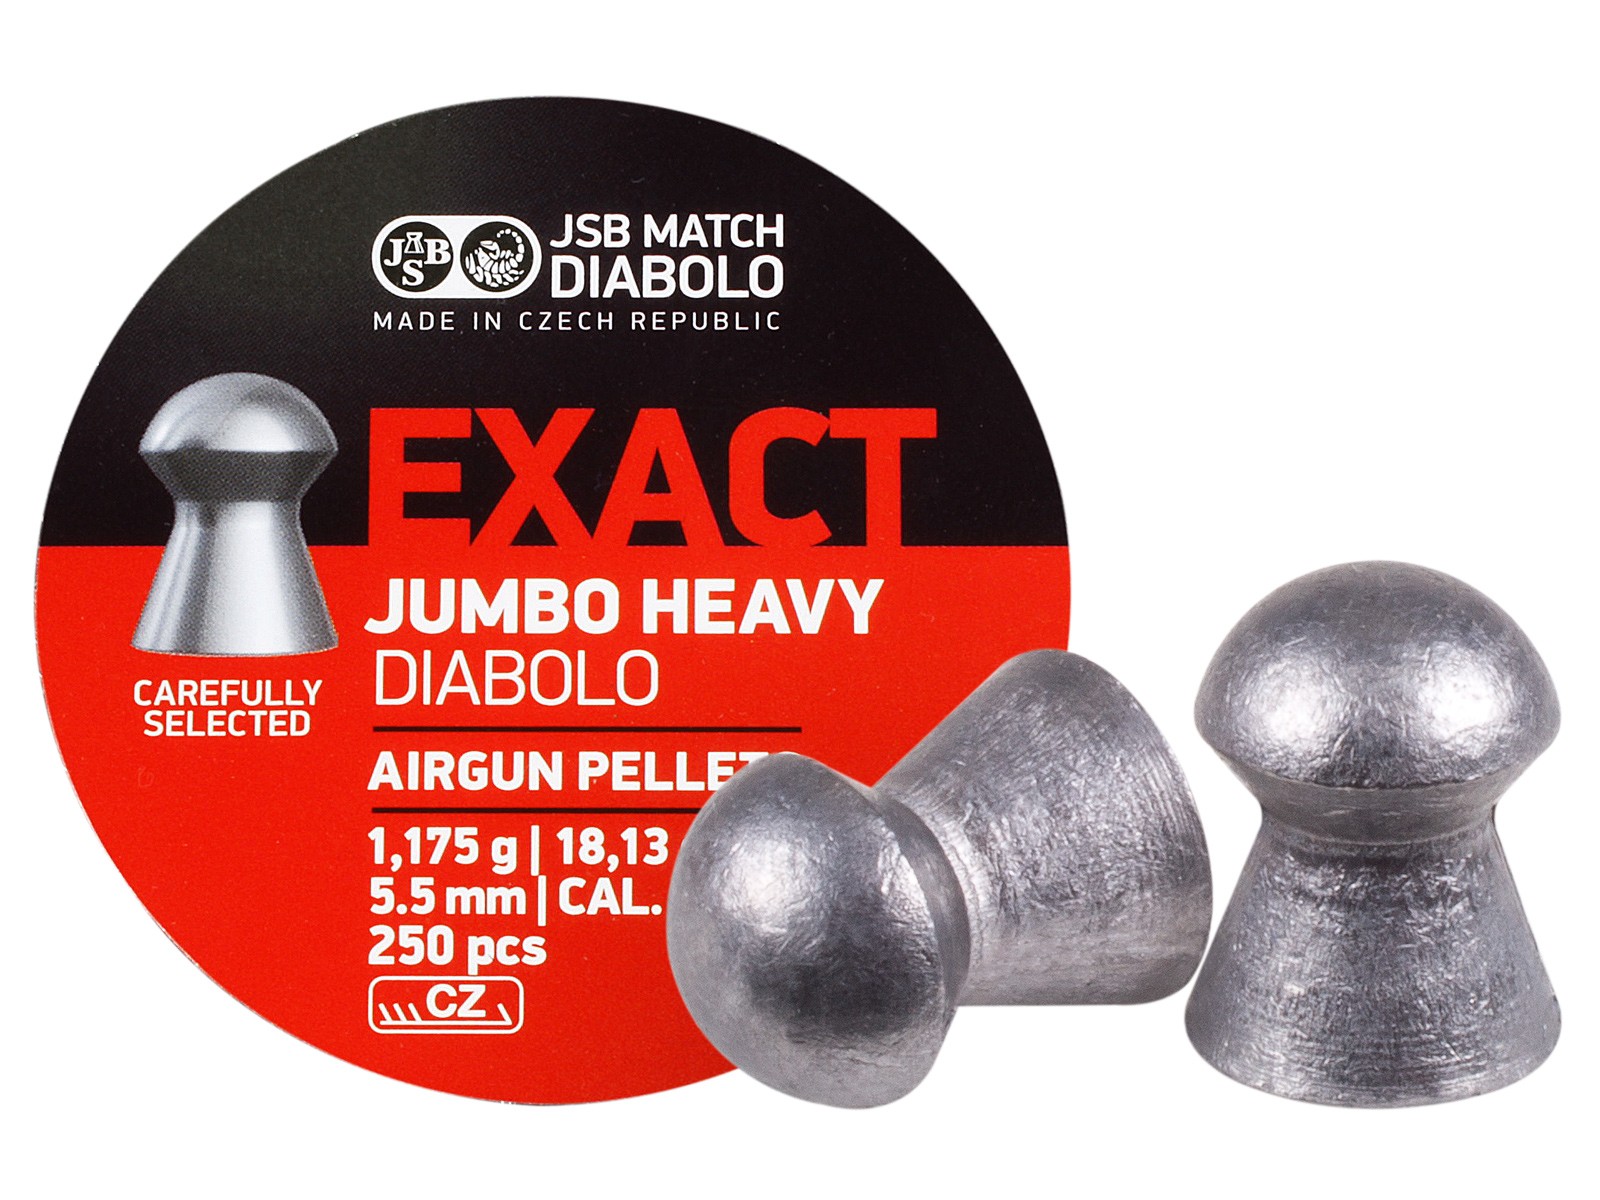 JSB Match Diabolo Exact Jumbo Heavy .22 Cal, 18.13 Grains, Domed, 250ct 0.22